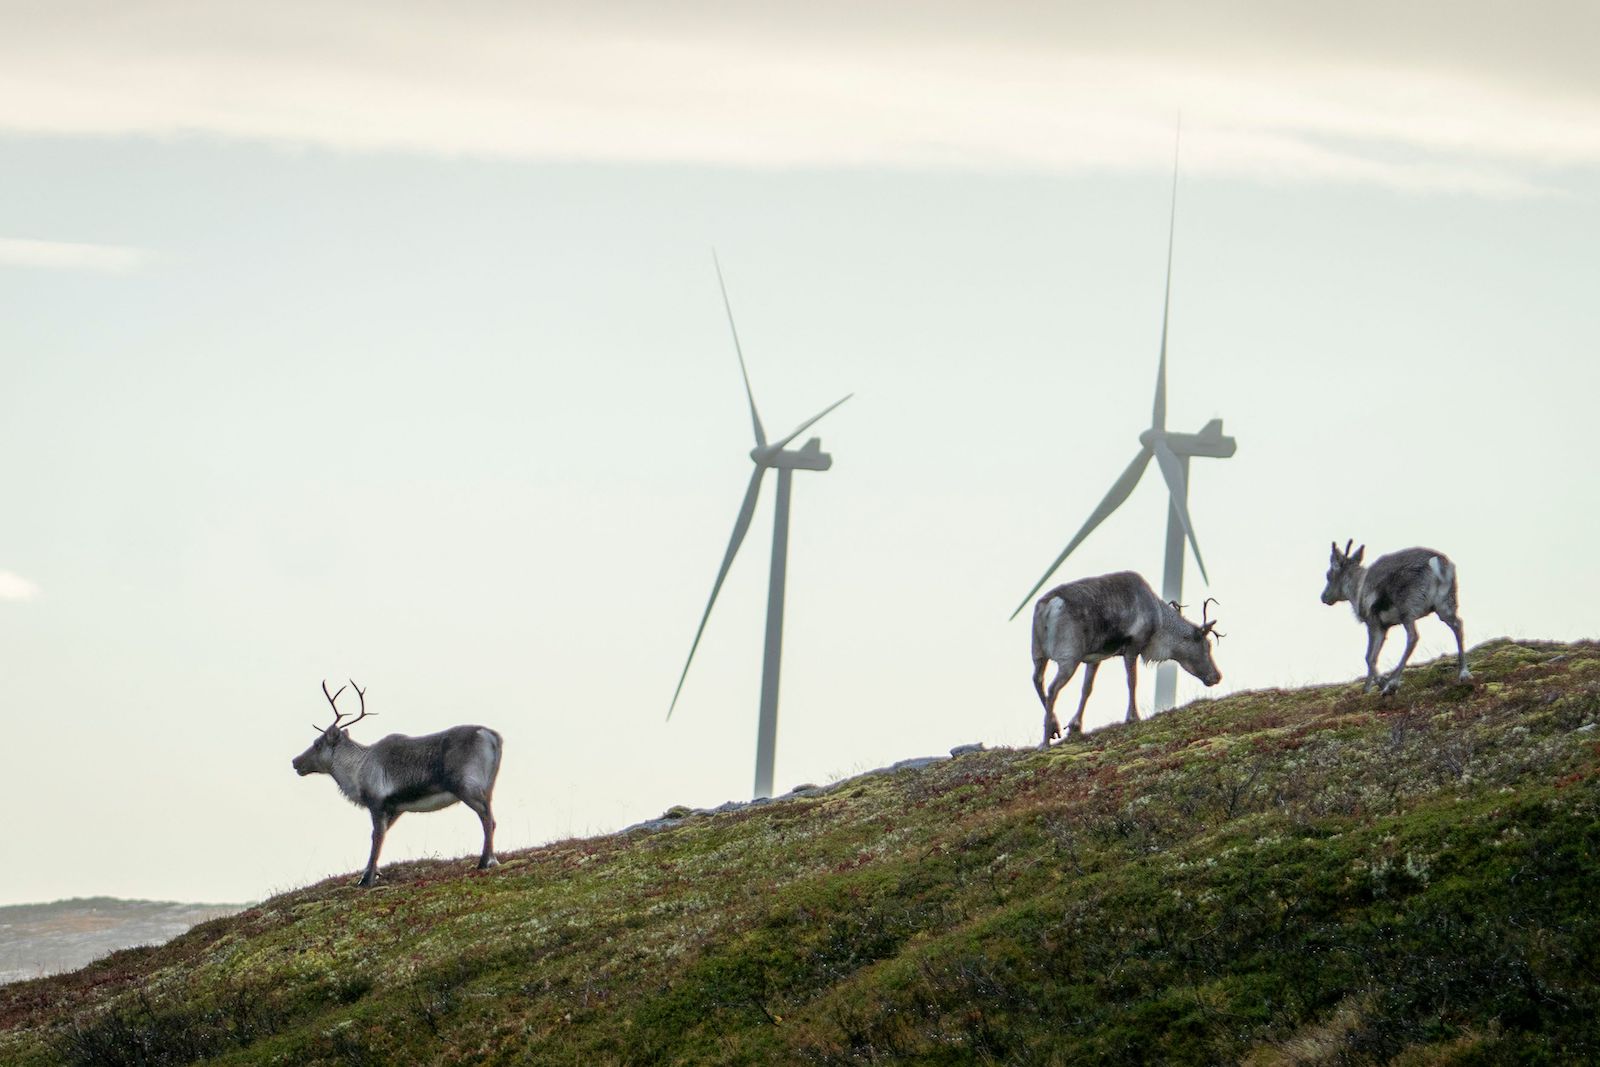 Two reindeer stand near wind turbines